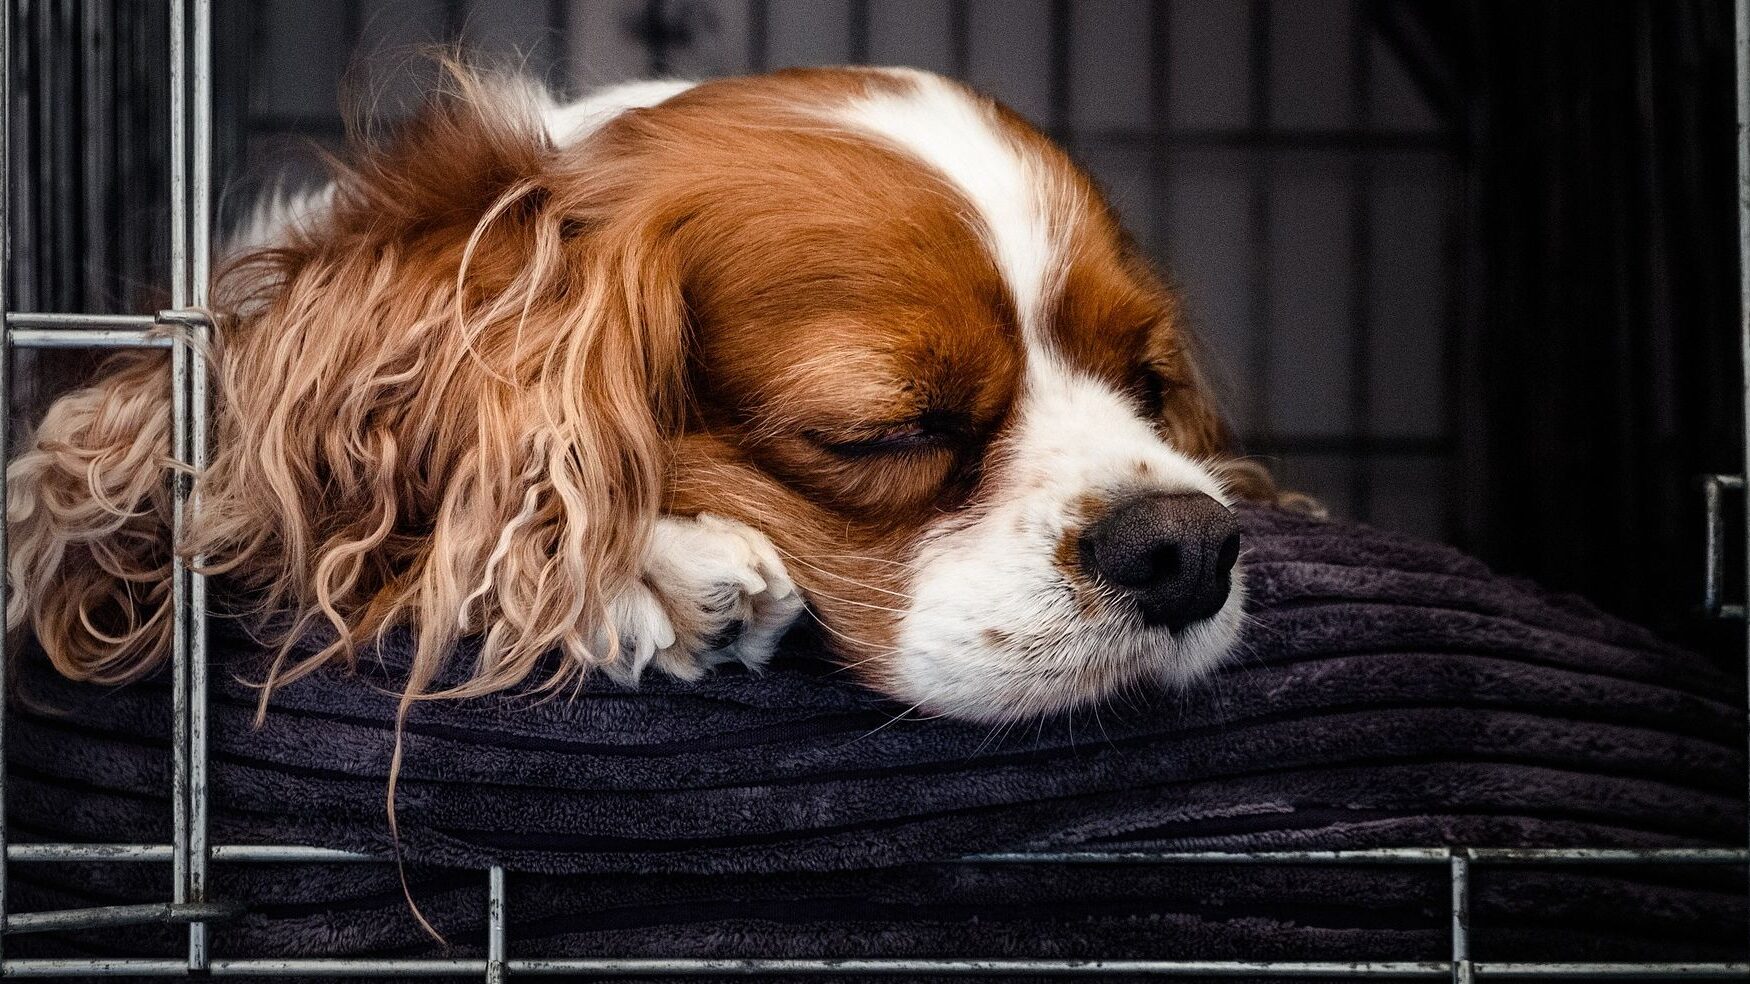 King cavalier puppy sleeping in crate